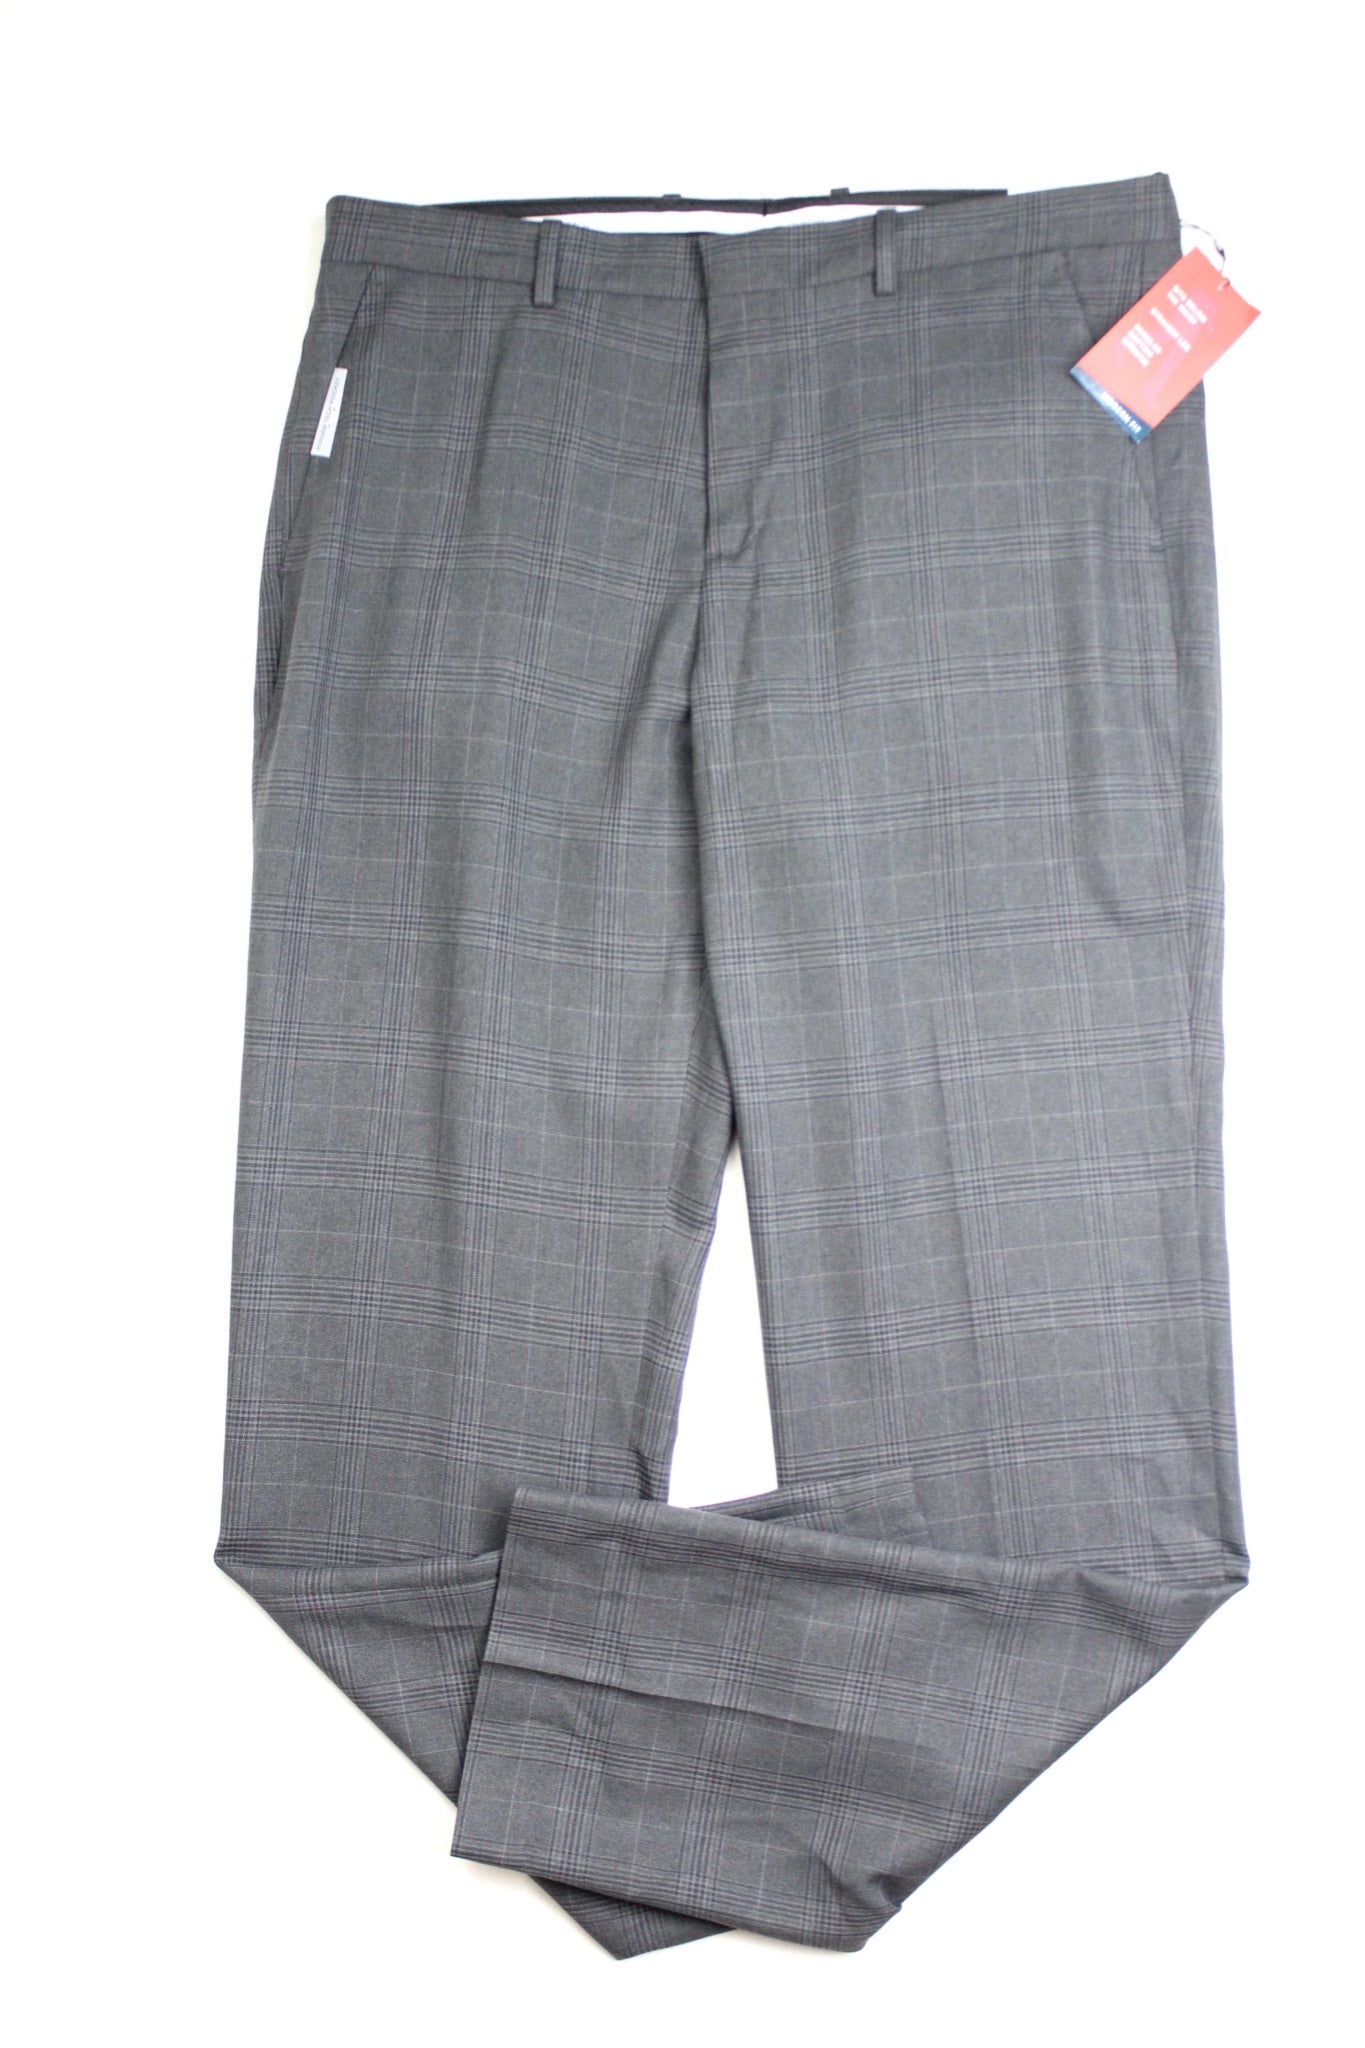 Perry Ellis Modern-Fit Subtle Check Performance Dress Pants 32 x 34 Grey